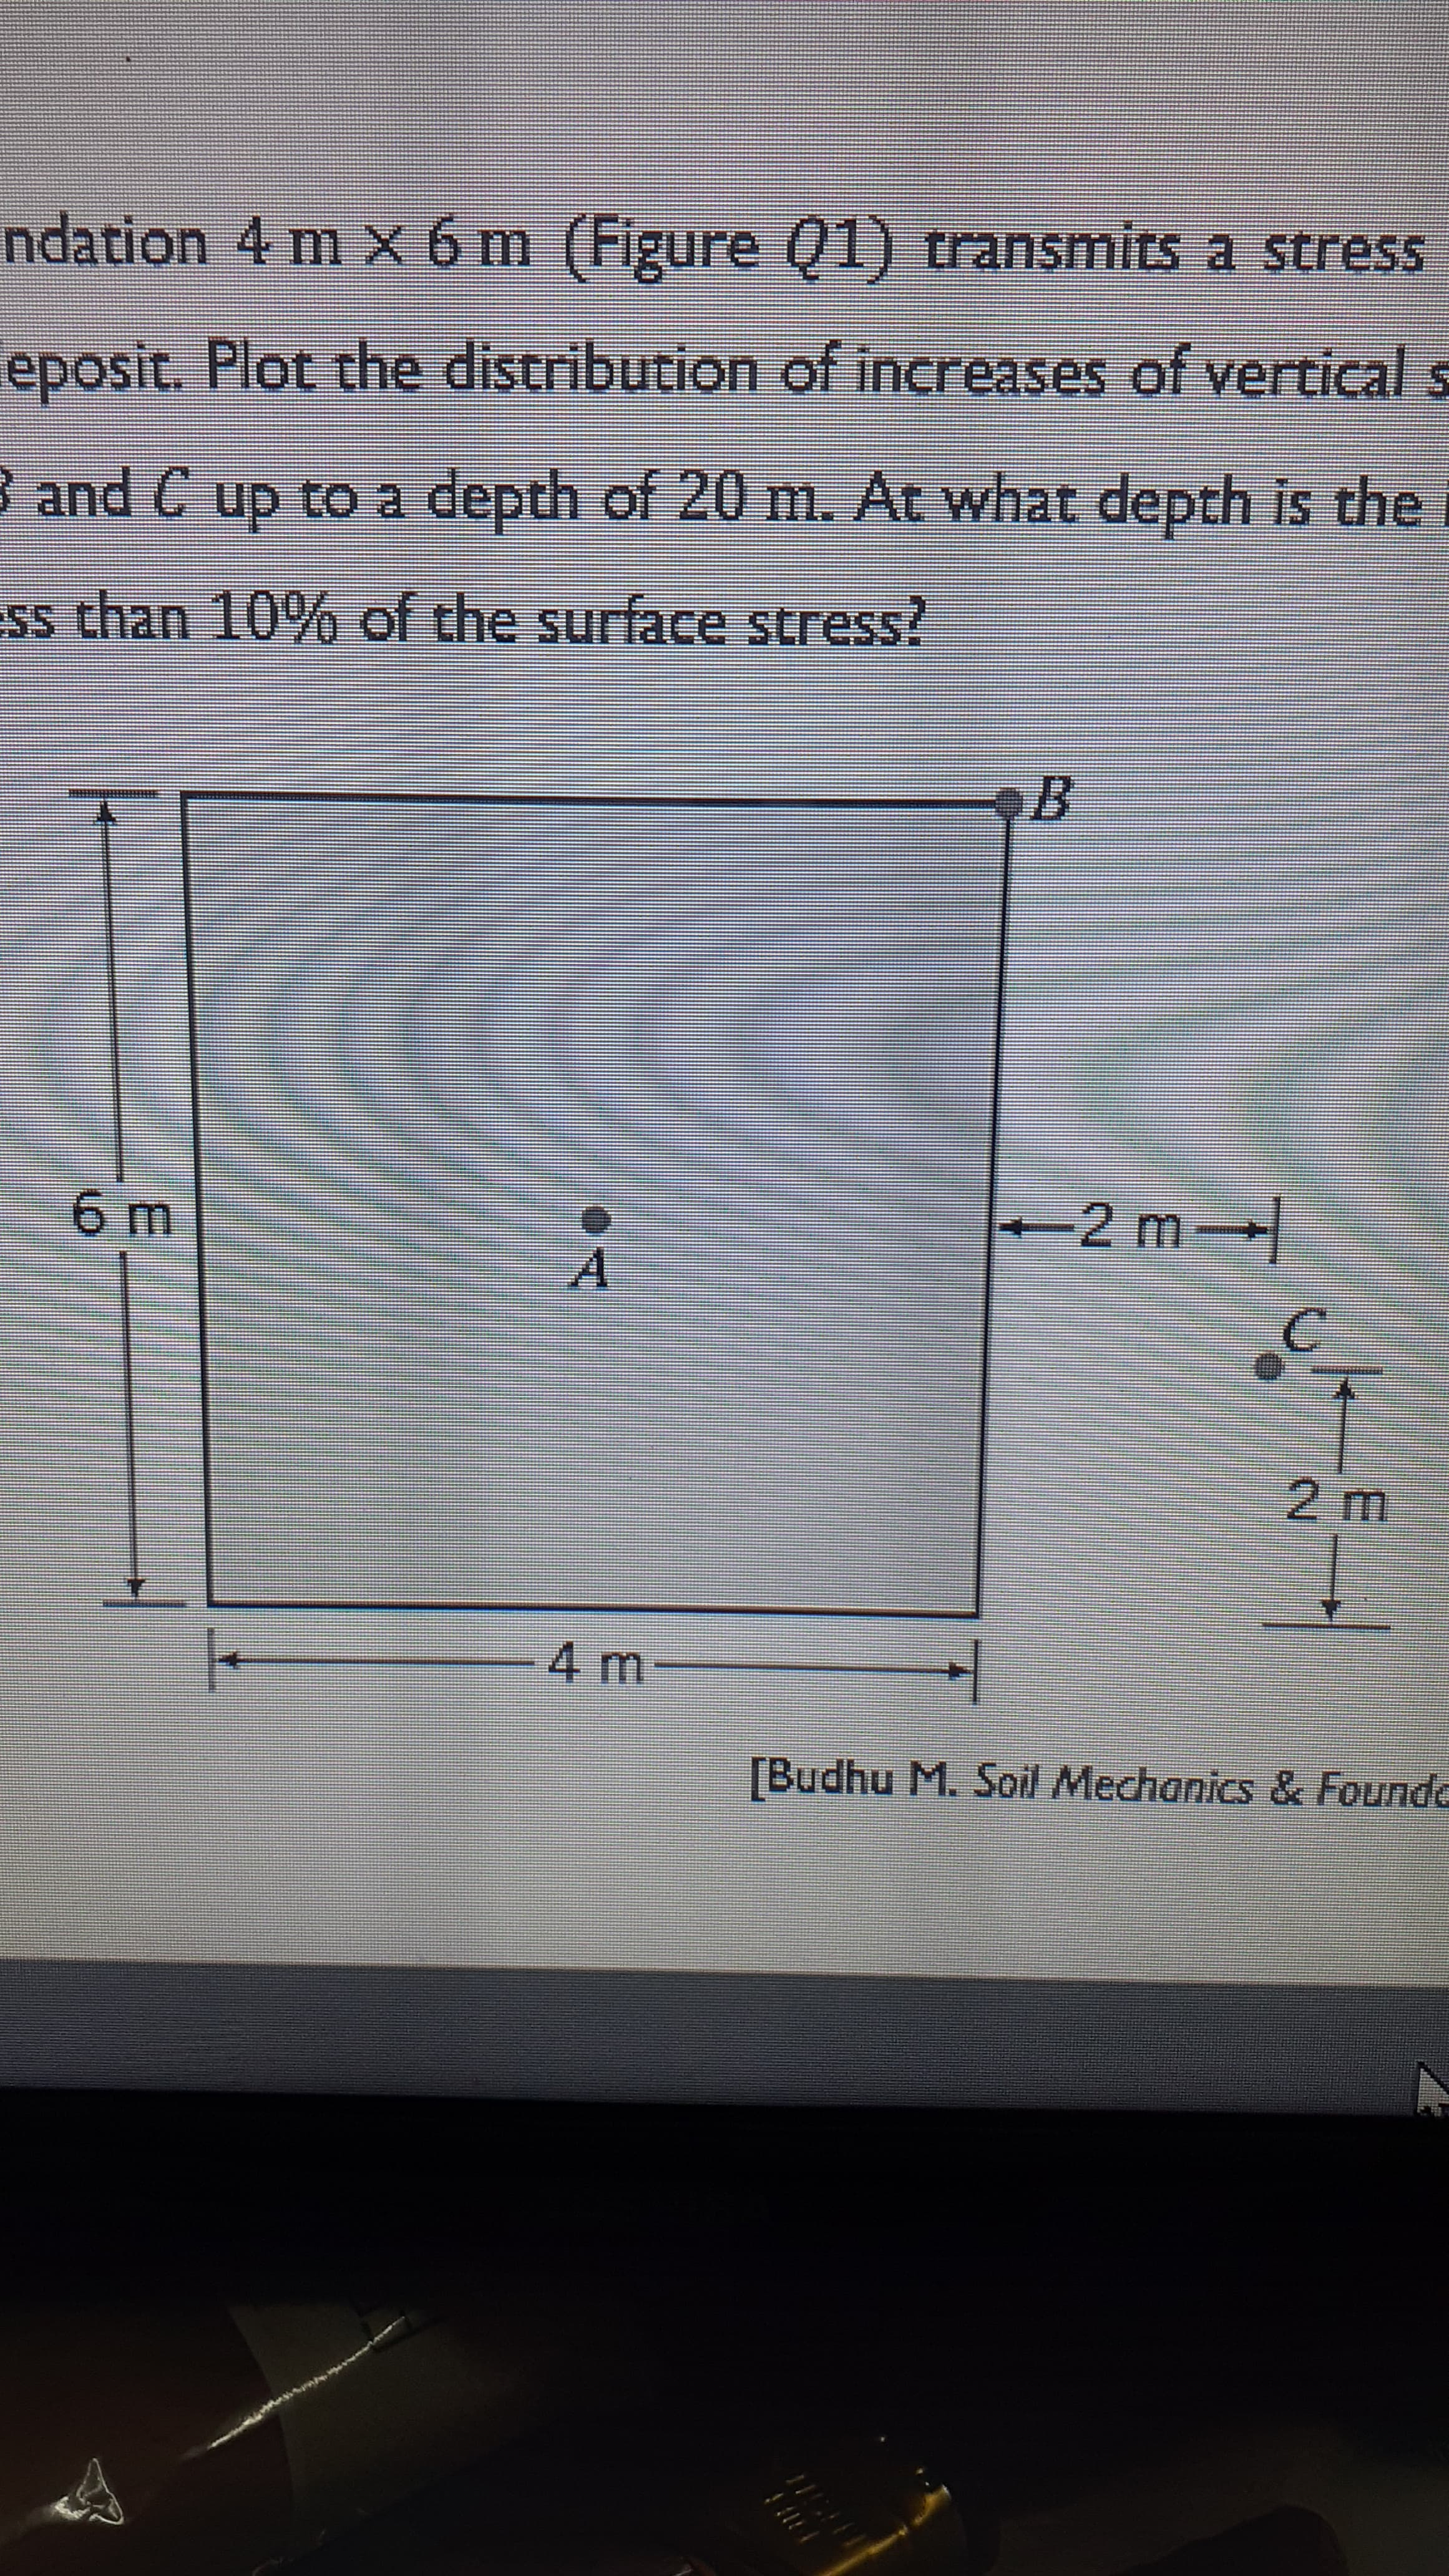 ndation 4 m X 6 m (Figure Q1) transmits a stress
eposit. Plot the distribution of increases of vertical
3 and C up to a depth of 20 m. At what depth is the i
ss than 10% of the surface stress?
+2 m
A.
[Budhu M. Soil Mechanics & Foundo
